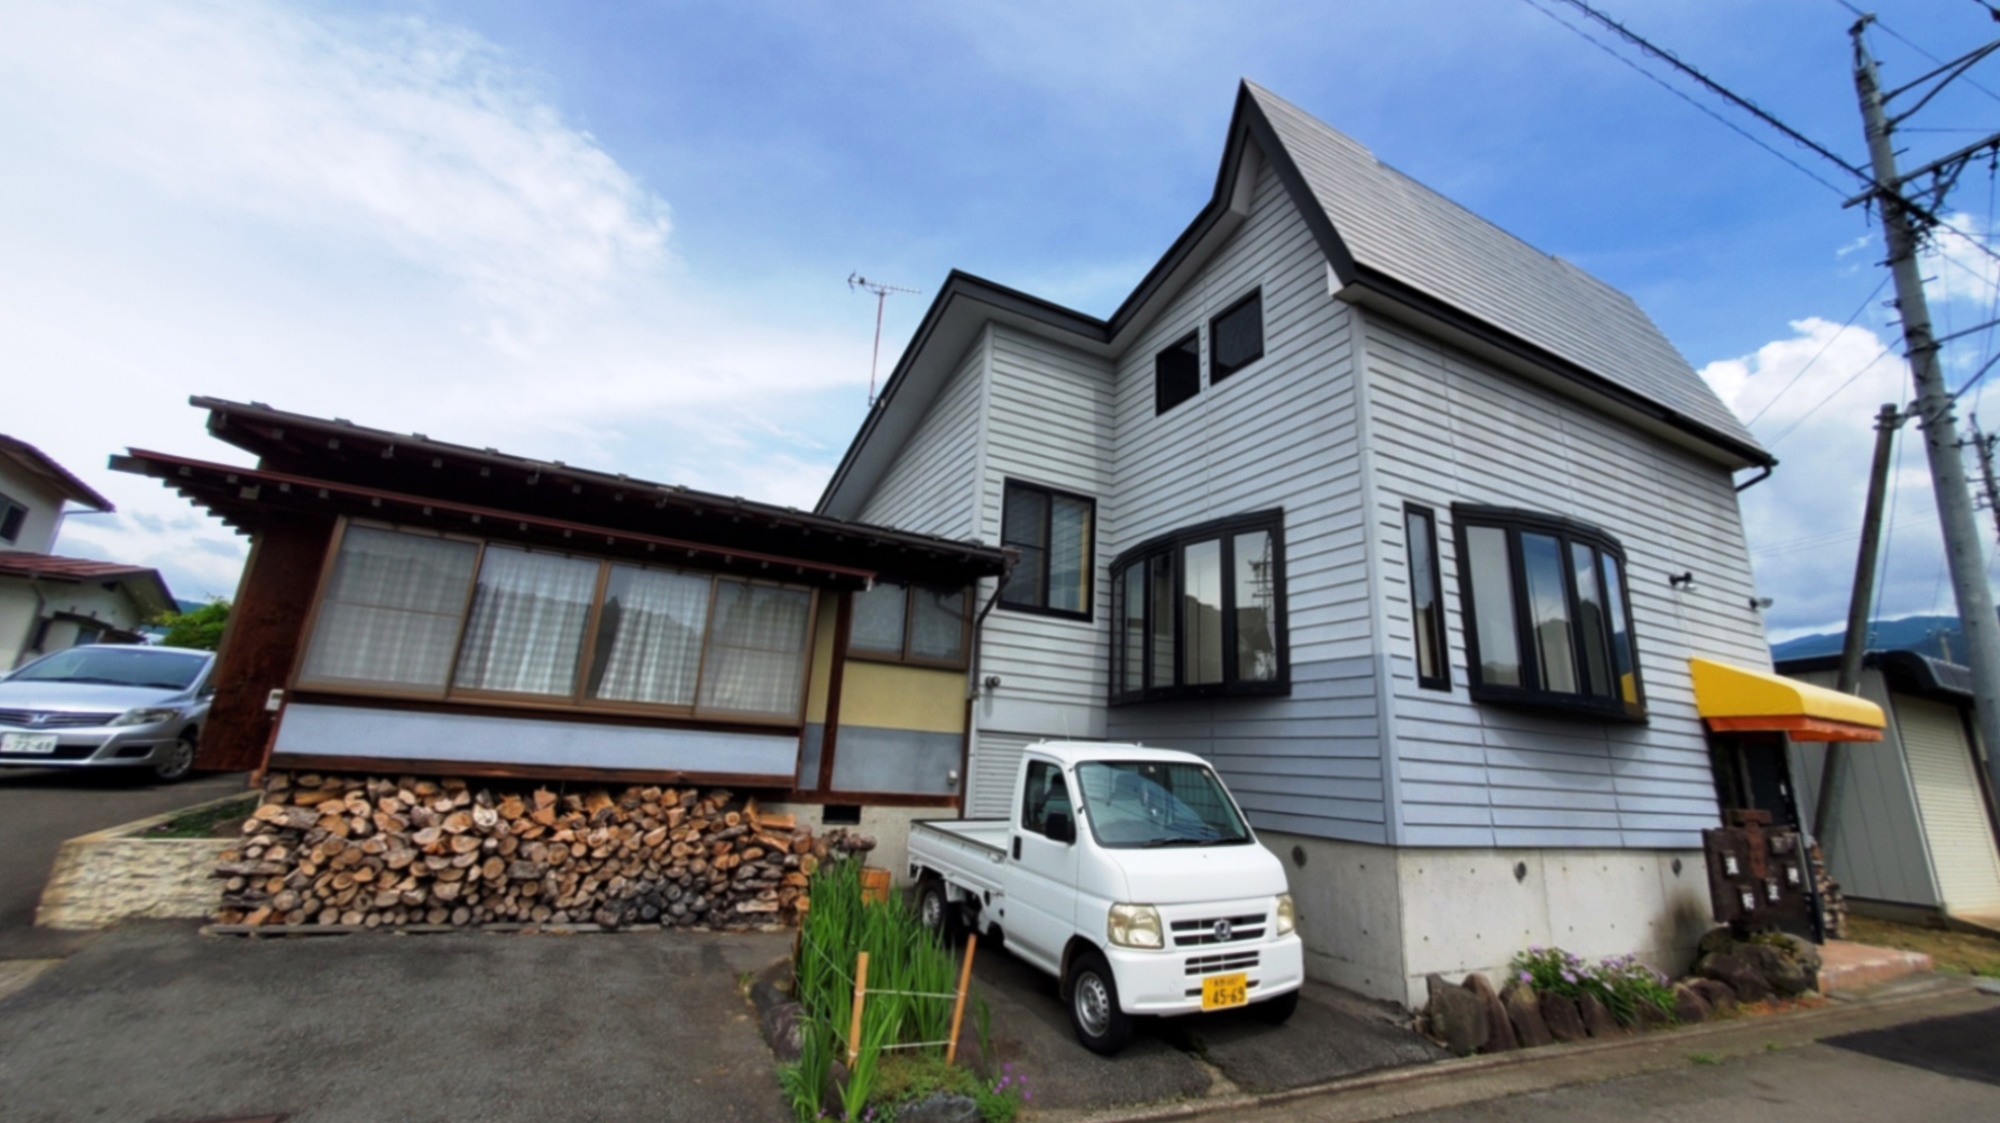 Guest House Honami-Kaido